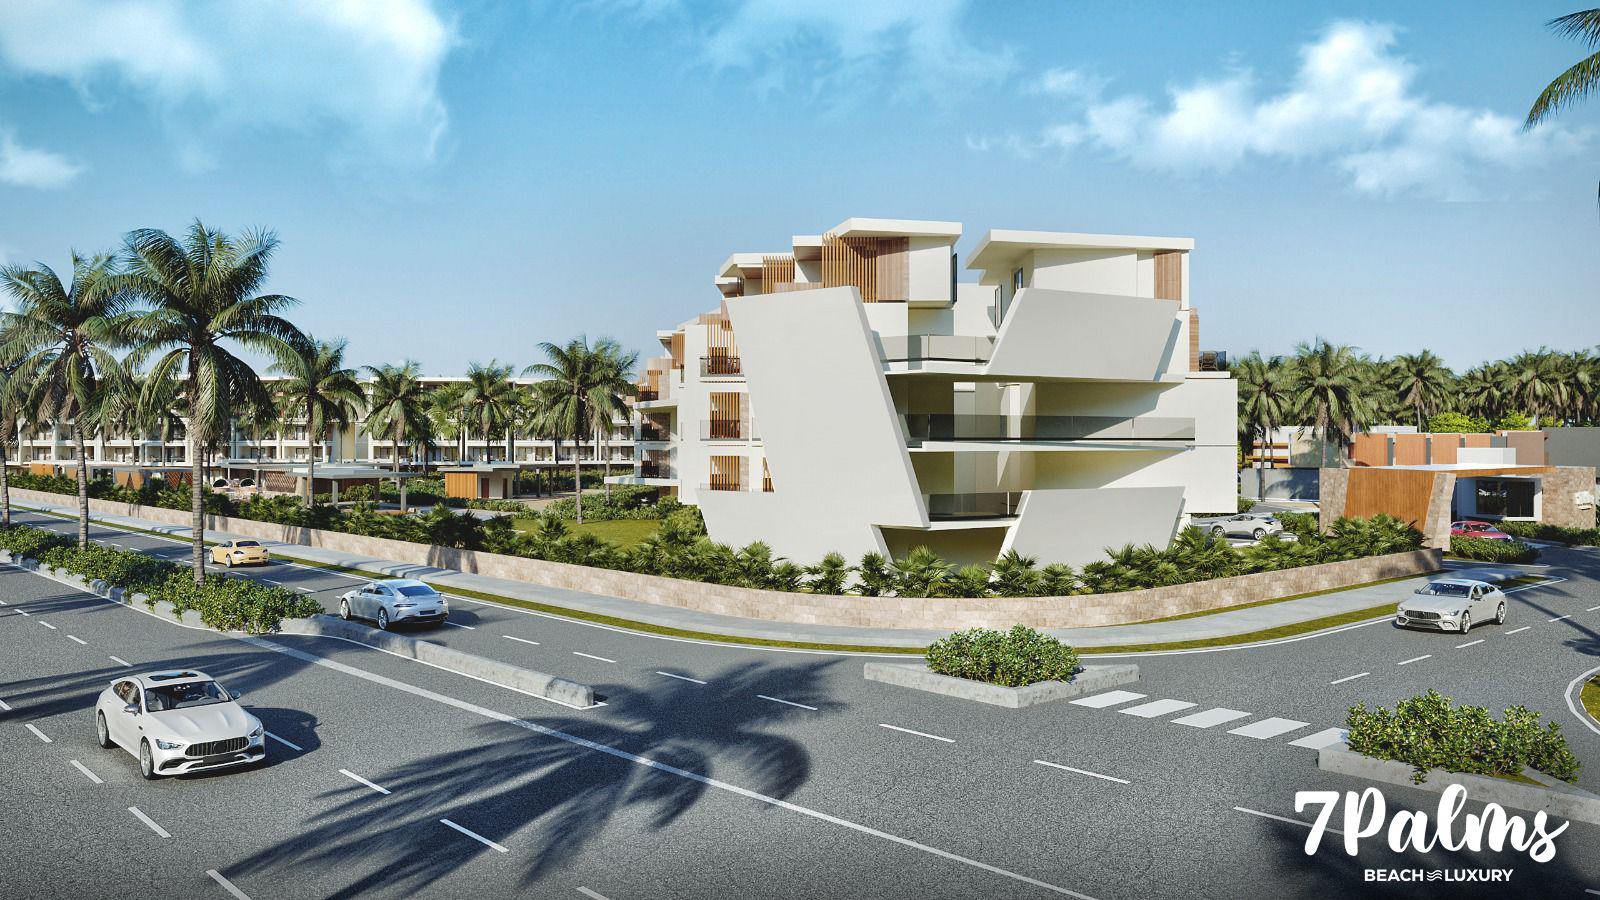 apartamentos - 7 Palms Beach Luxury Espectacular Proyecto en Venta Punta Cana. 1